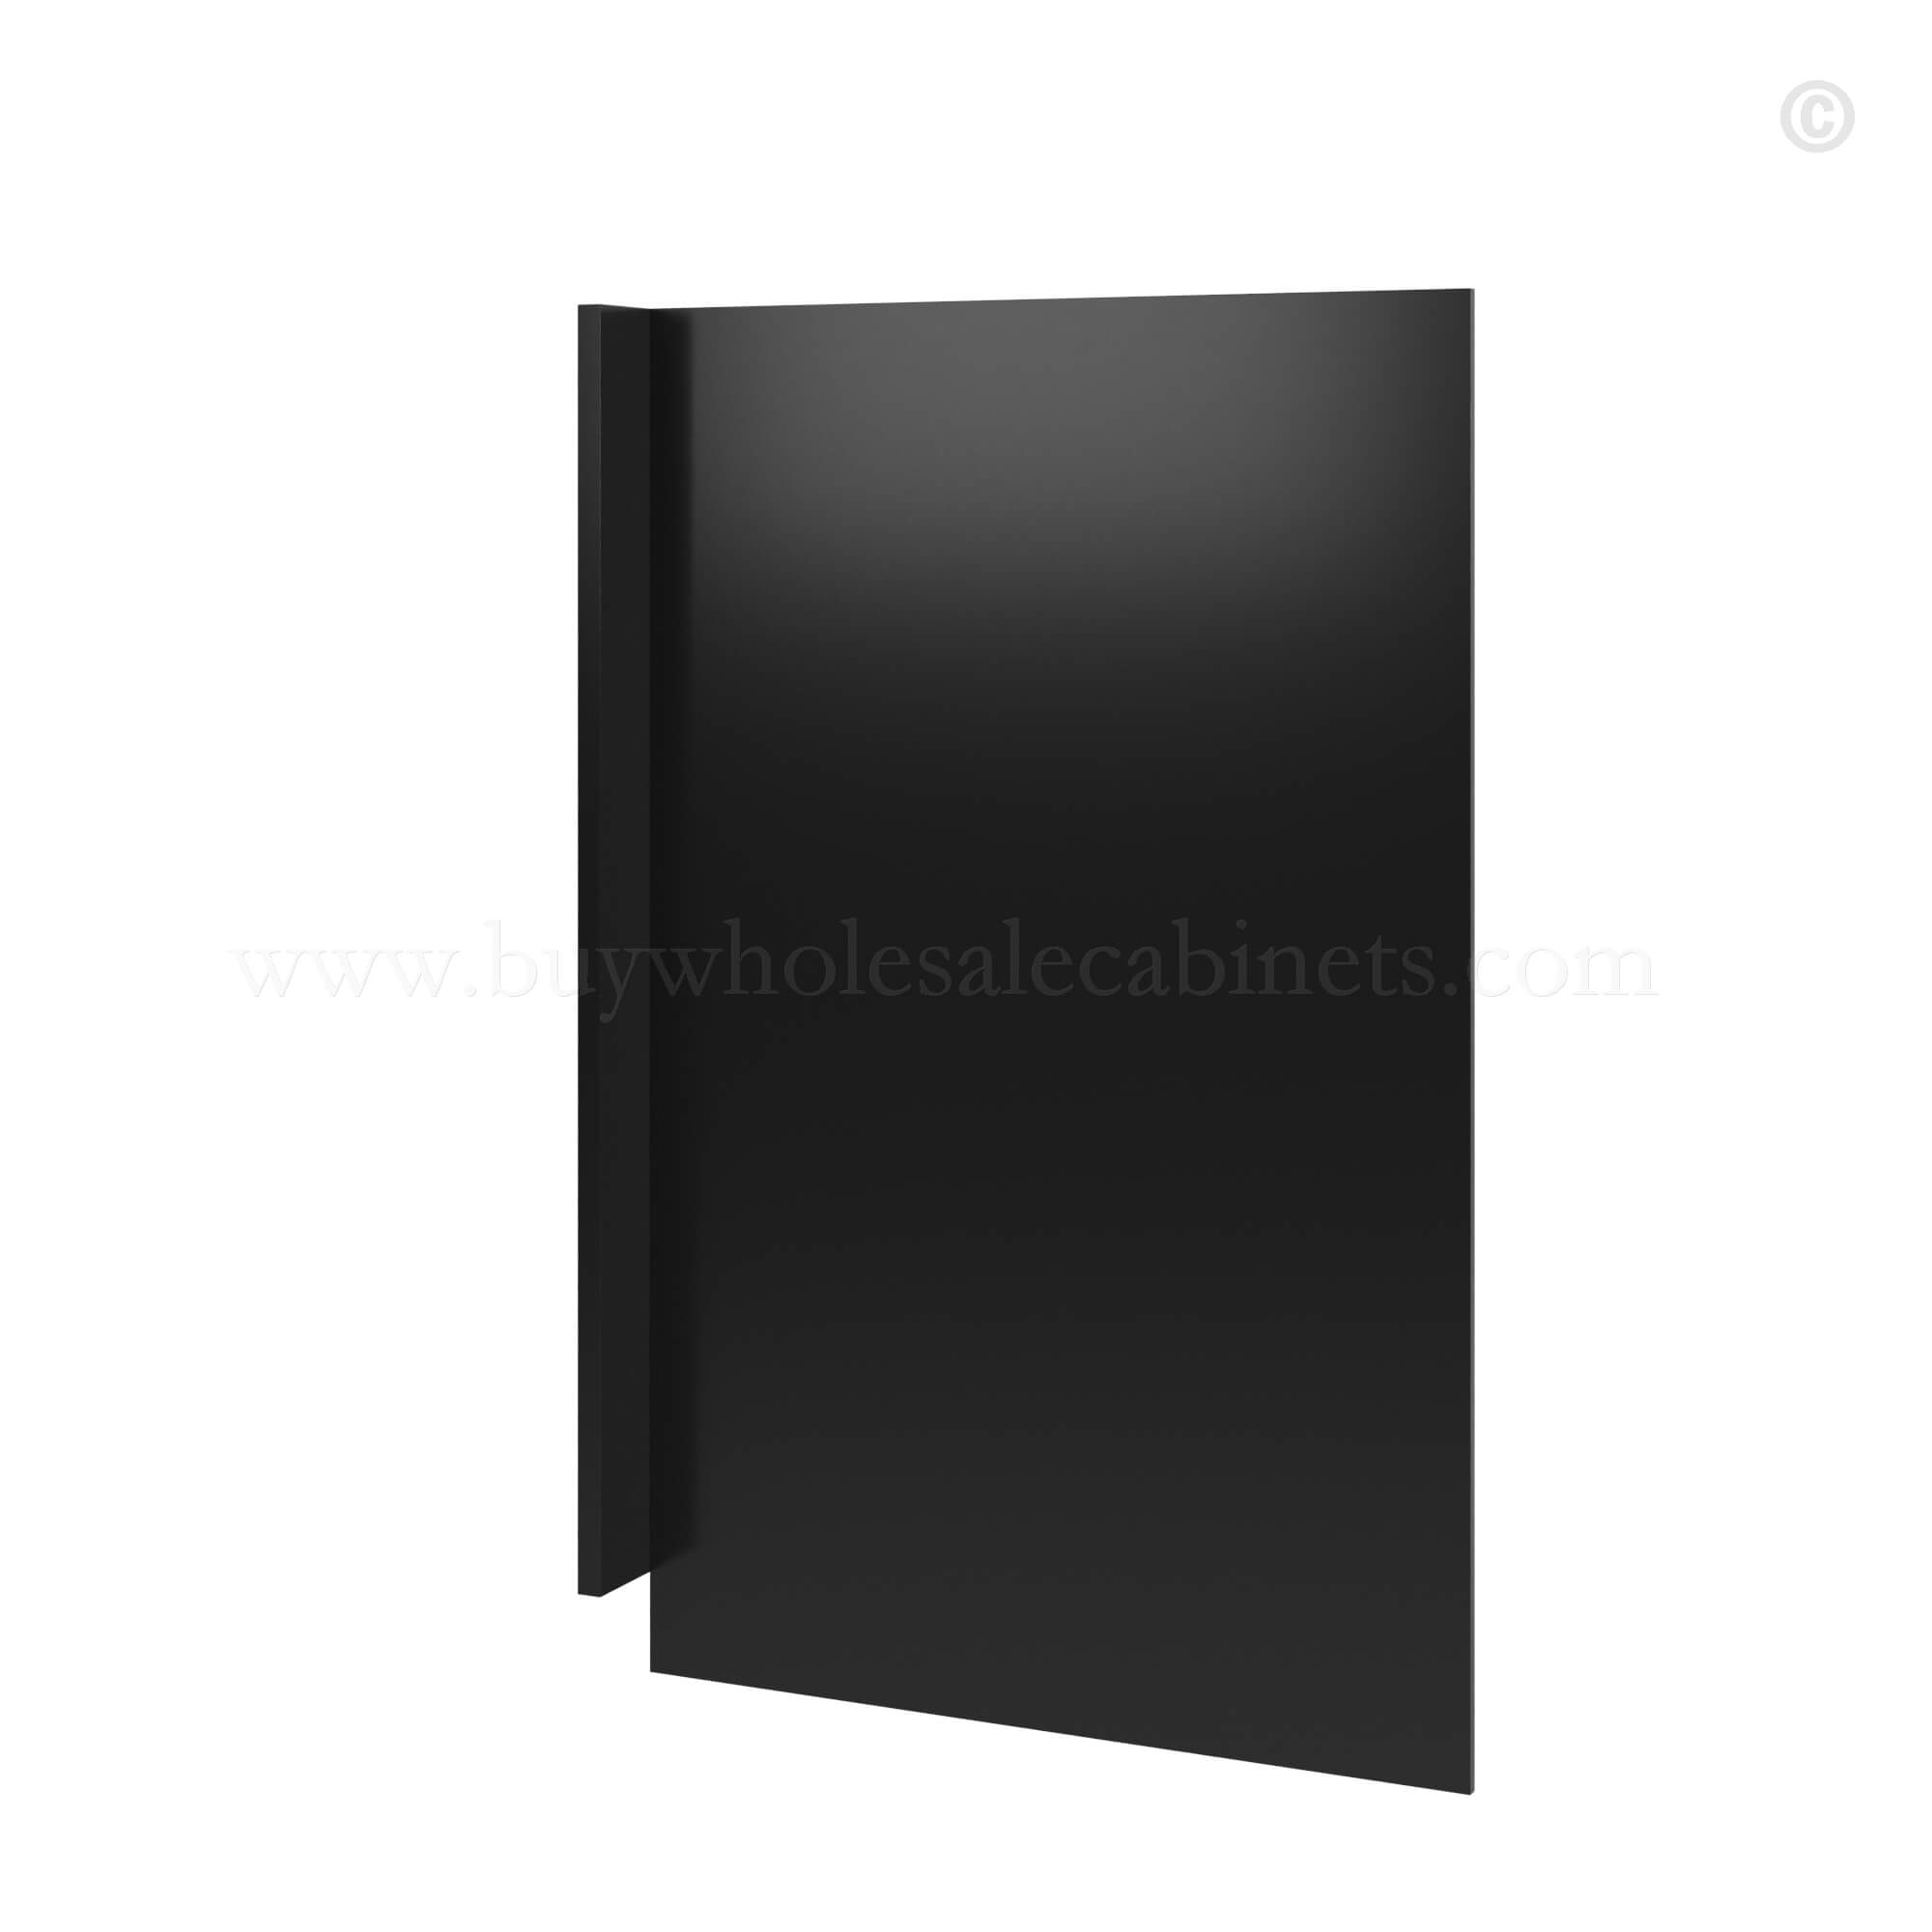 Black Shaker Dishwasher Return Panel, rta cabinets, wholesale cabinets